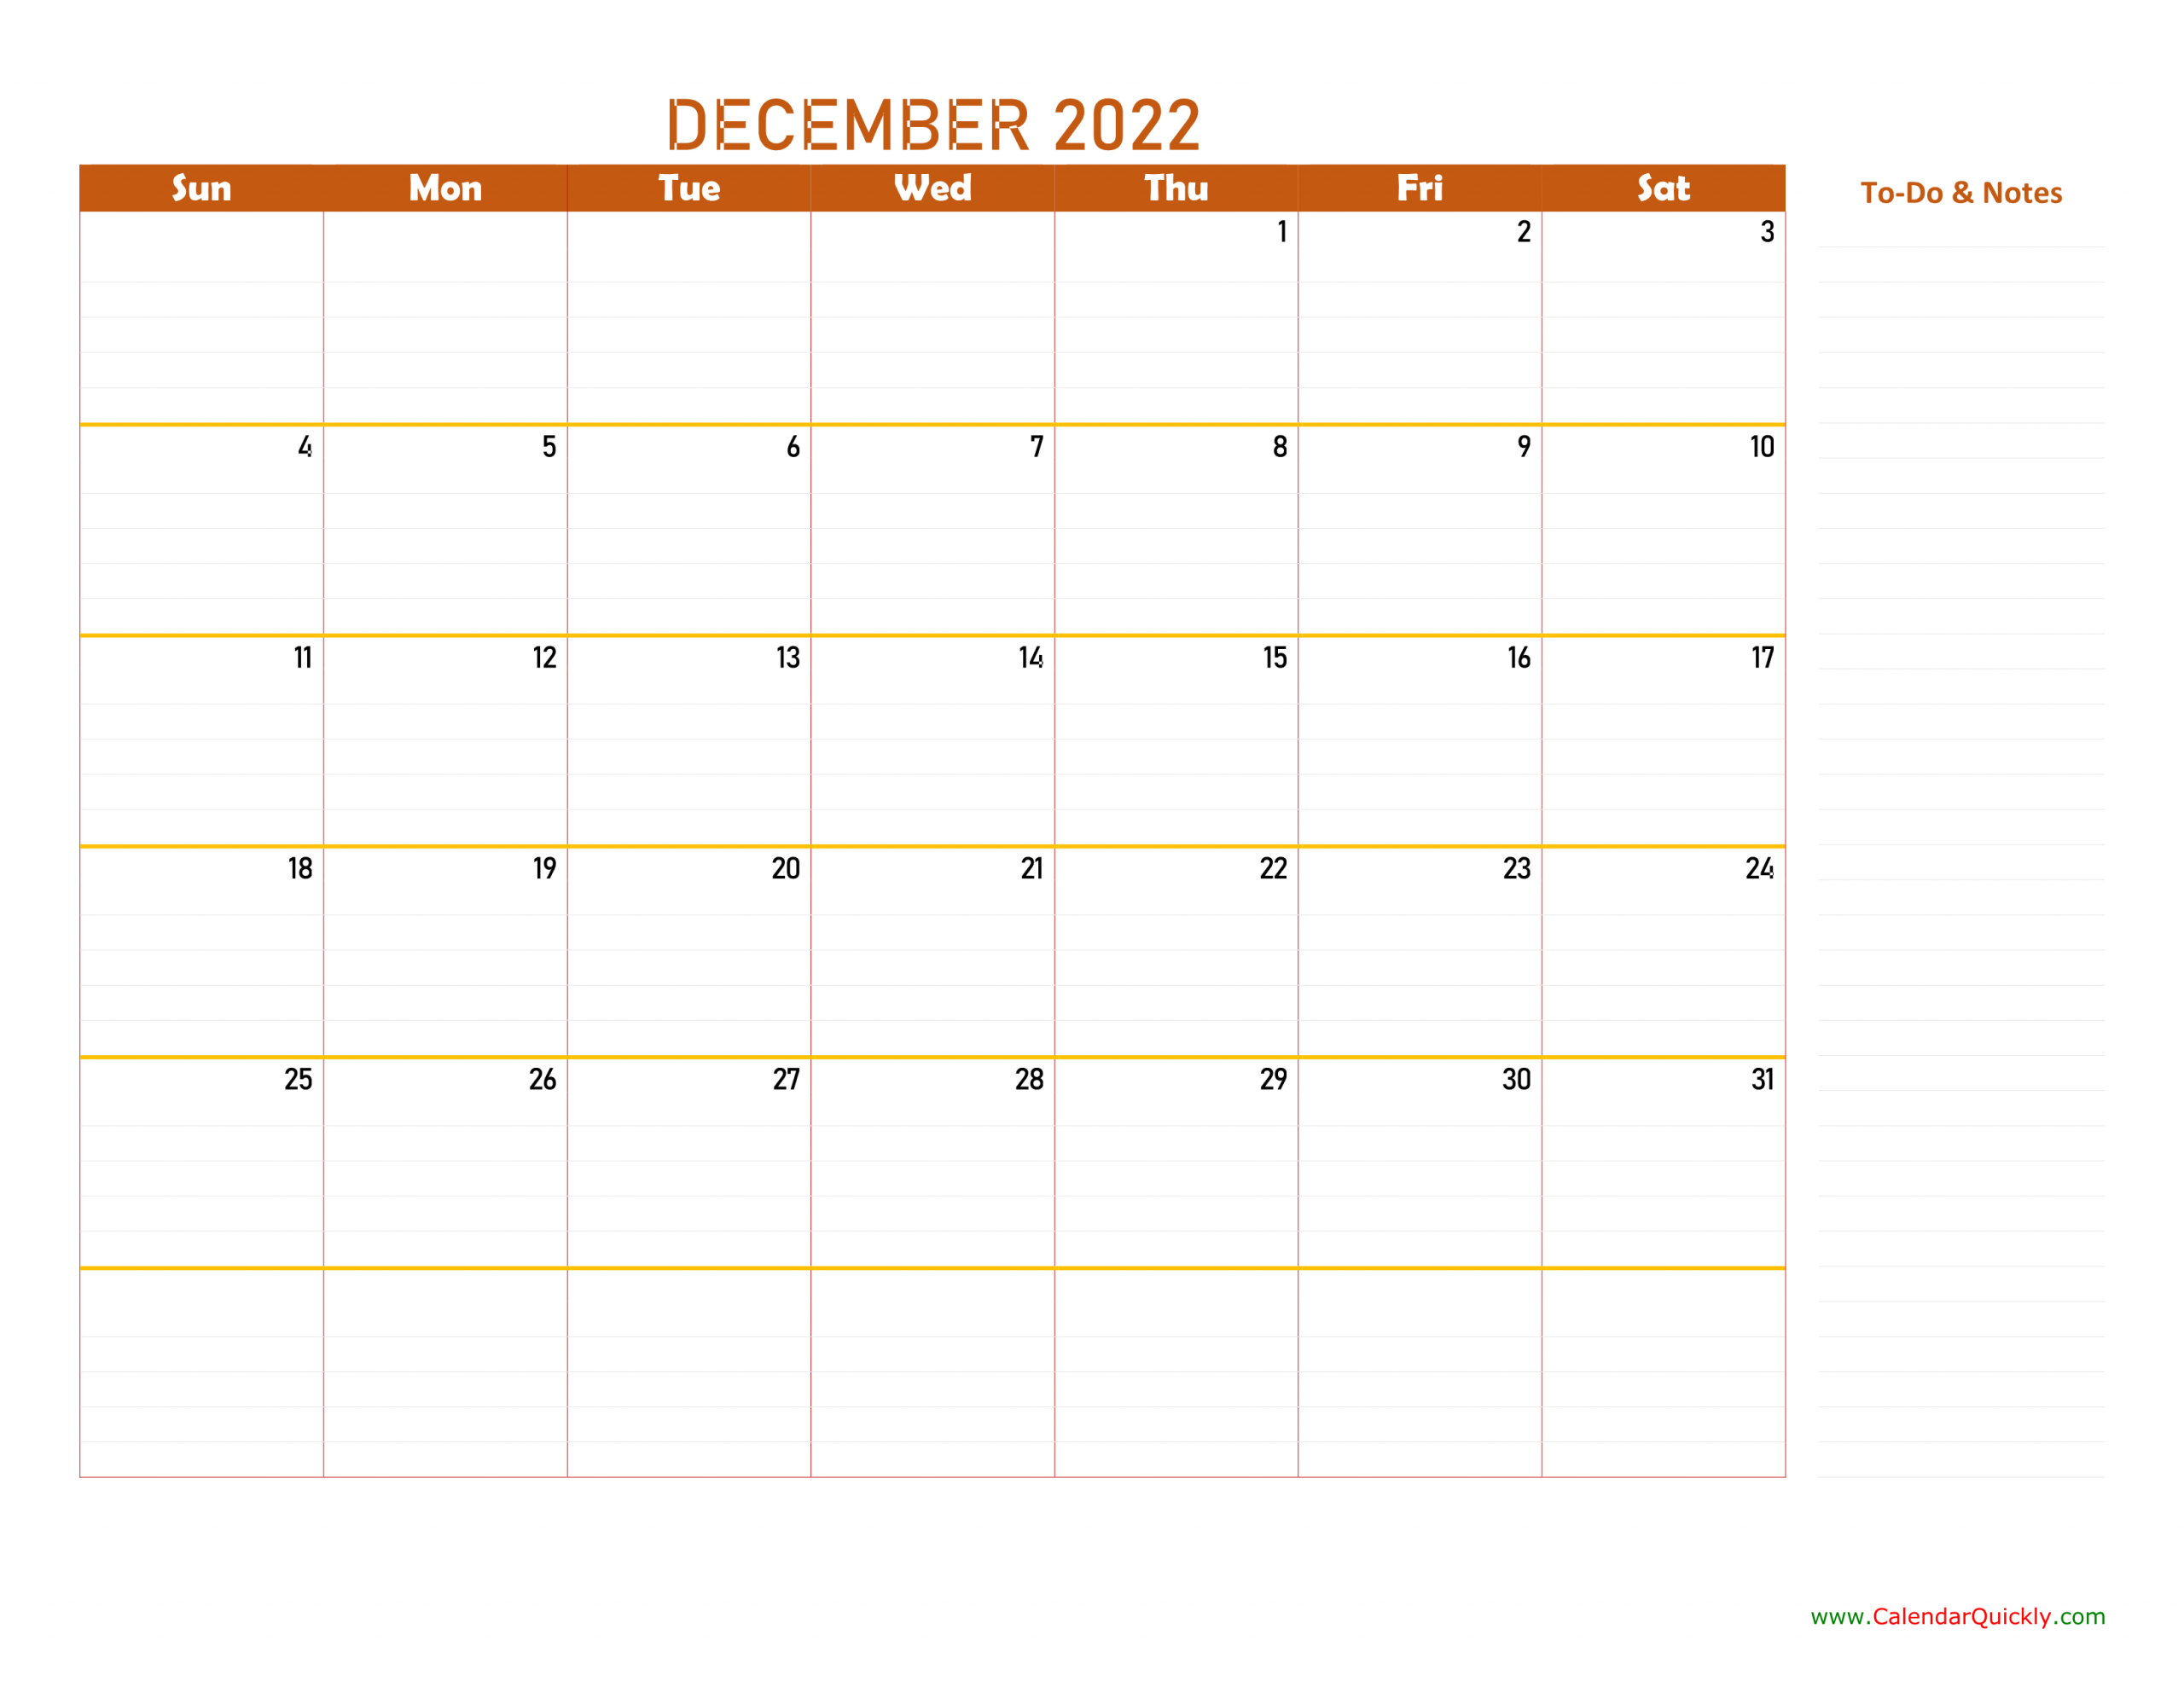 December 2022 Calendar | Calendar Quickly